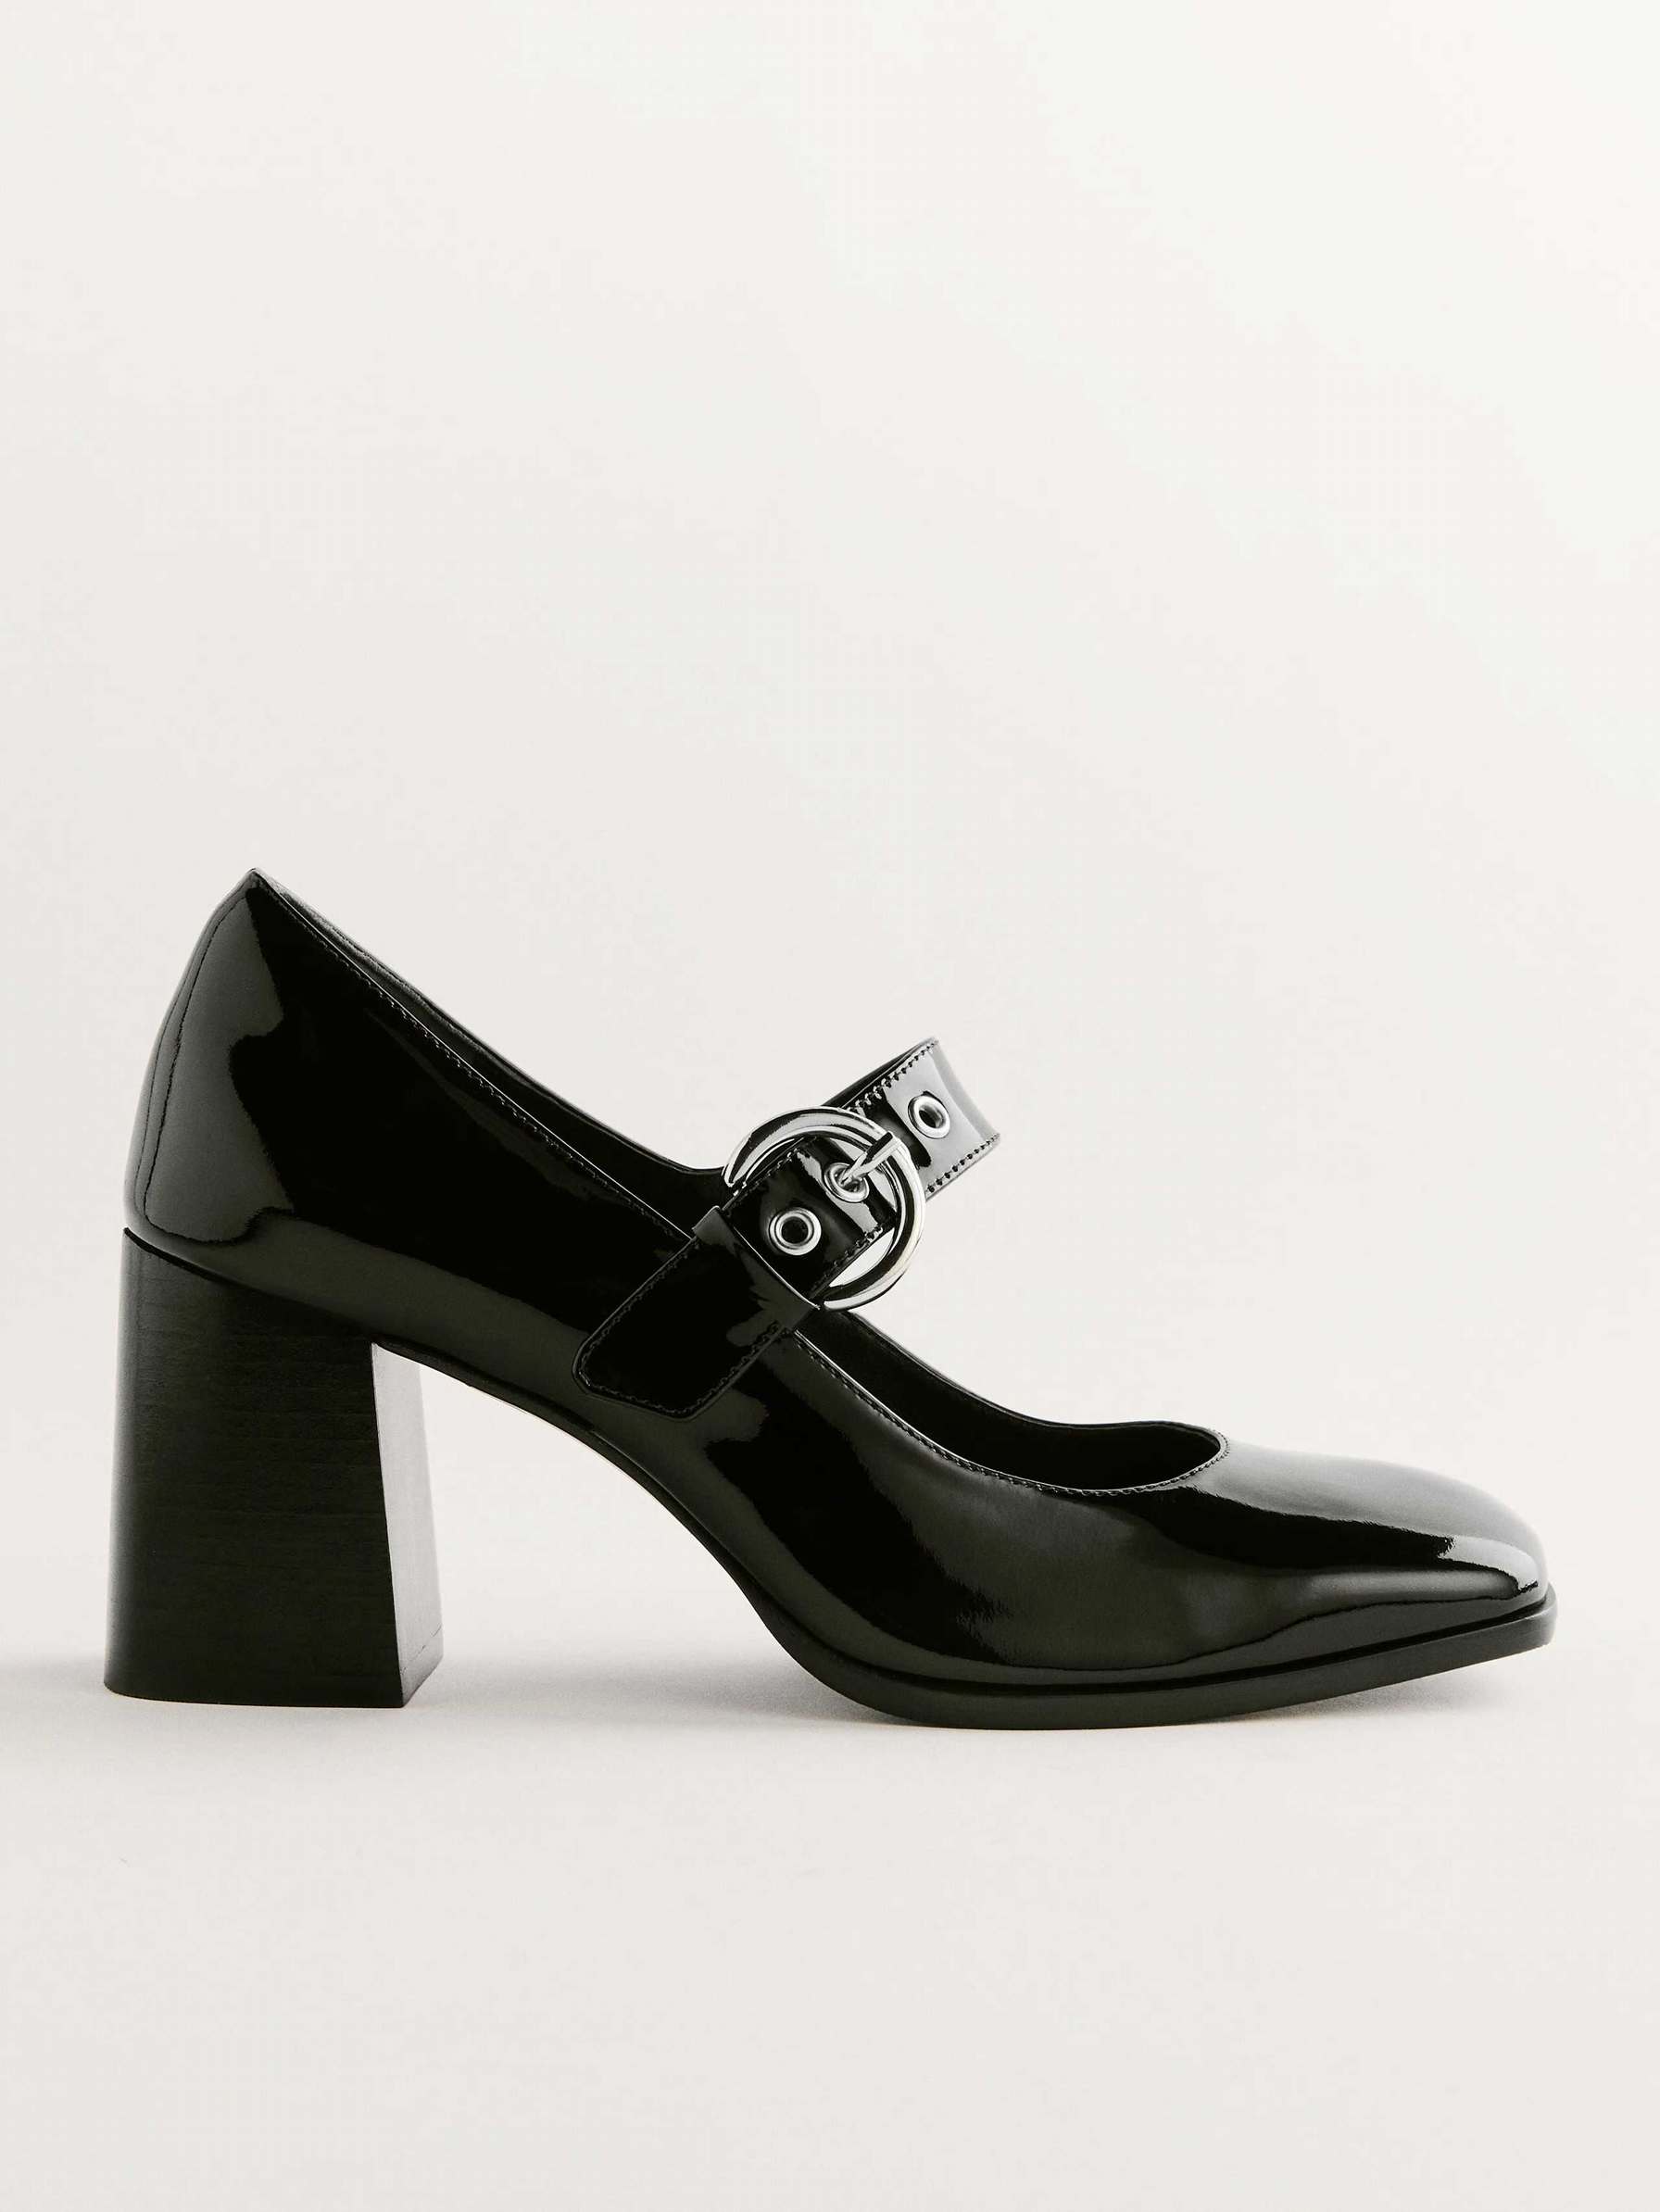 Reformation Naima Black Friday Sale - Womens Mary Jane Shoes Black